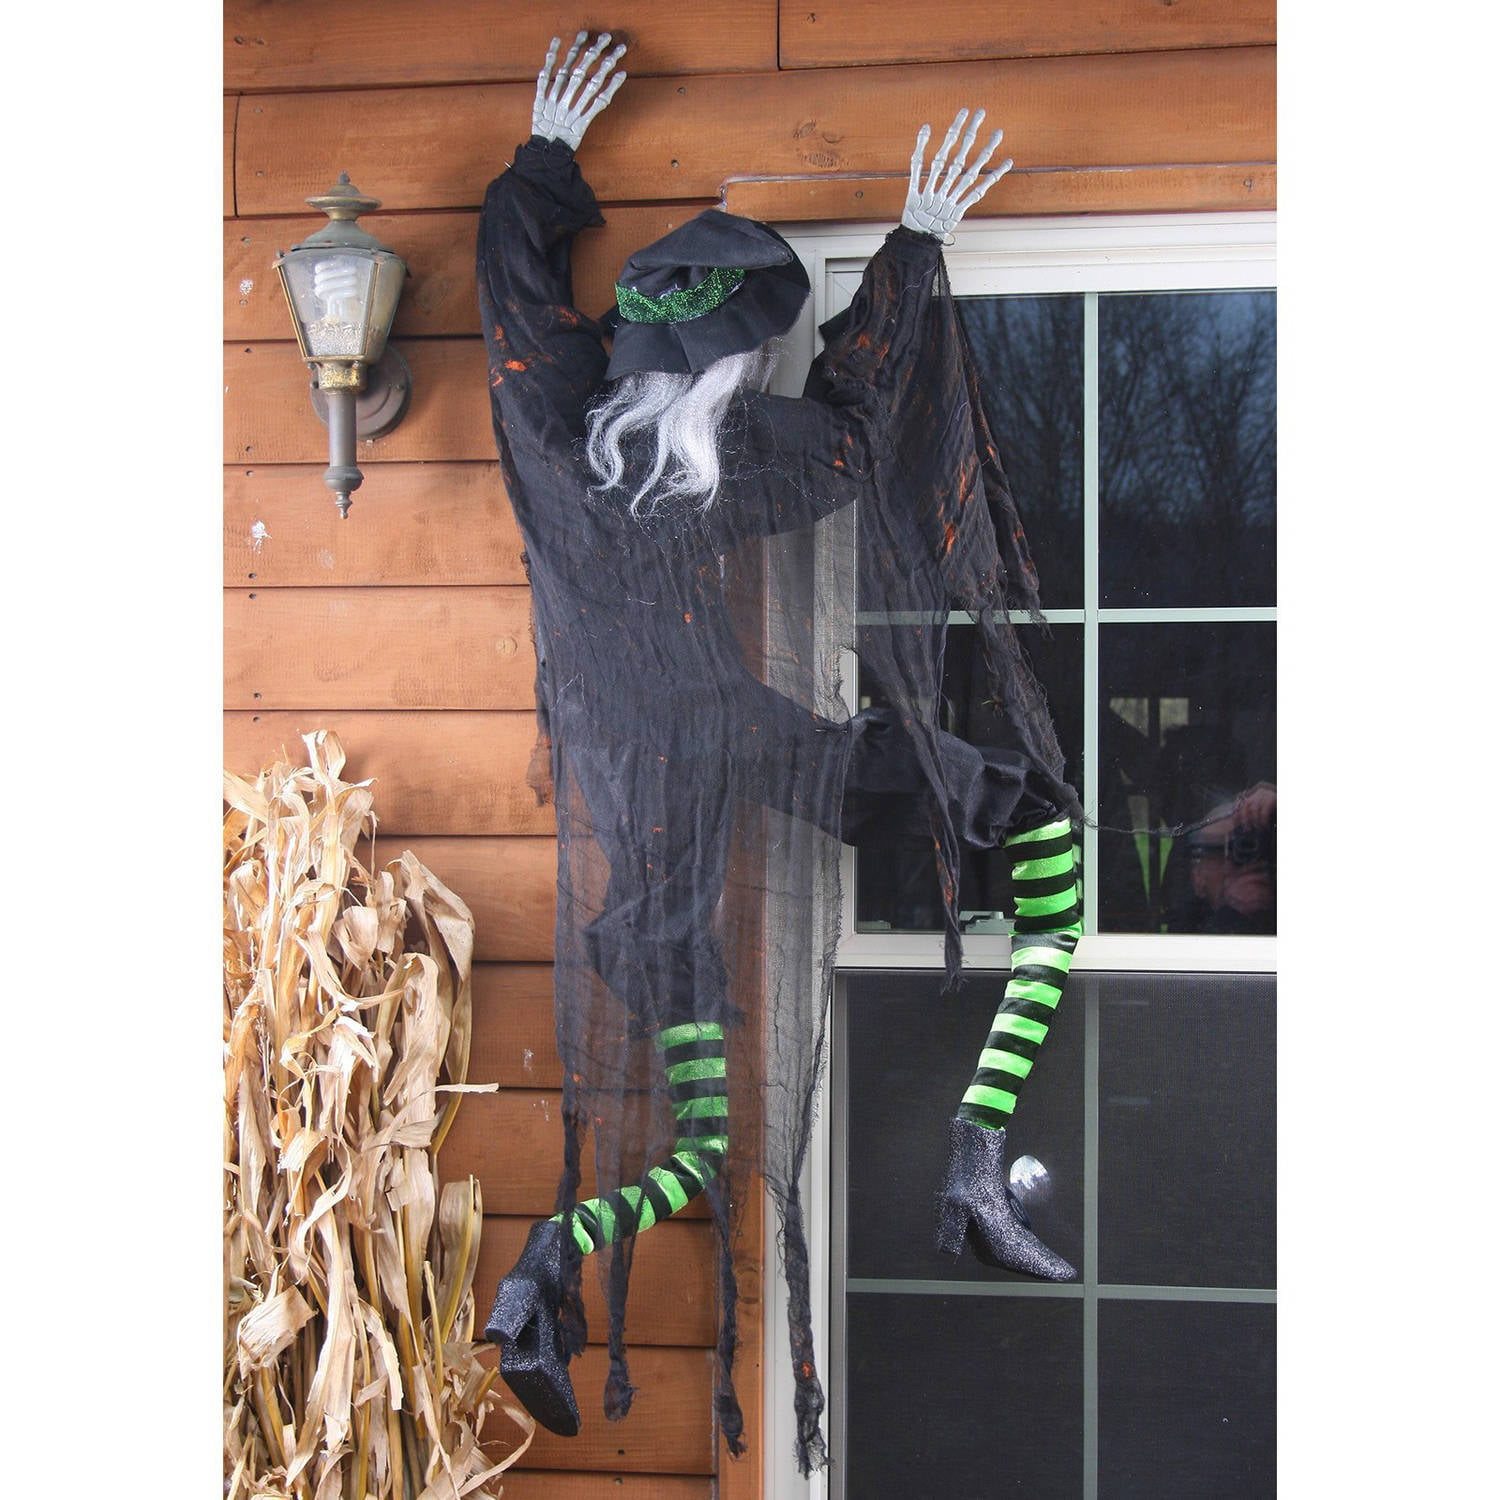 Lifelike Halloween Stuffed Dummy 6 ft Tall Life-Size Prop Poseable Decoration 